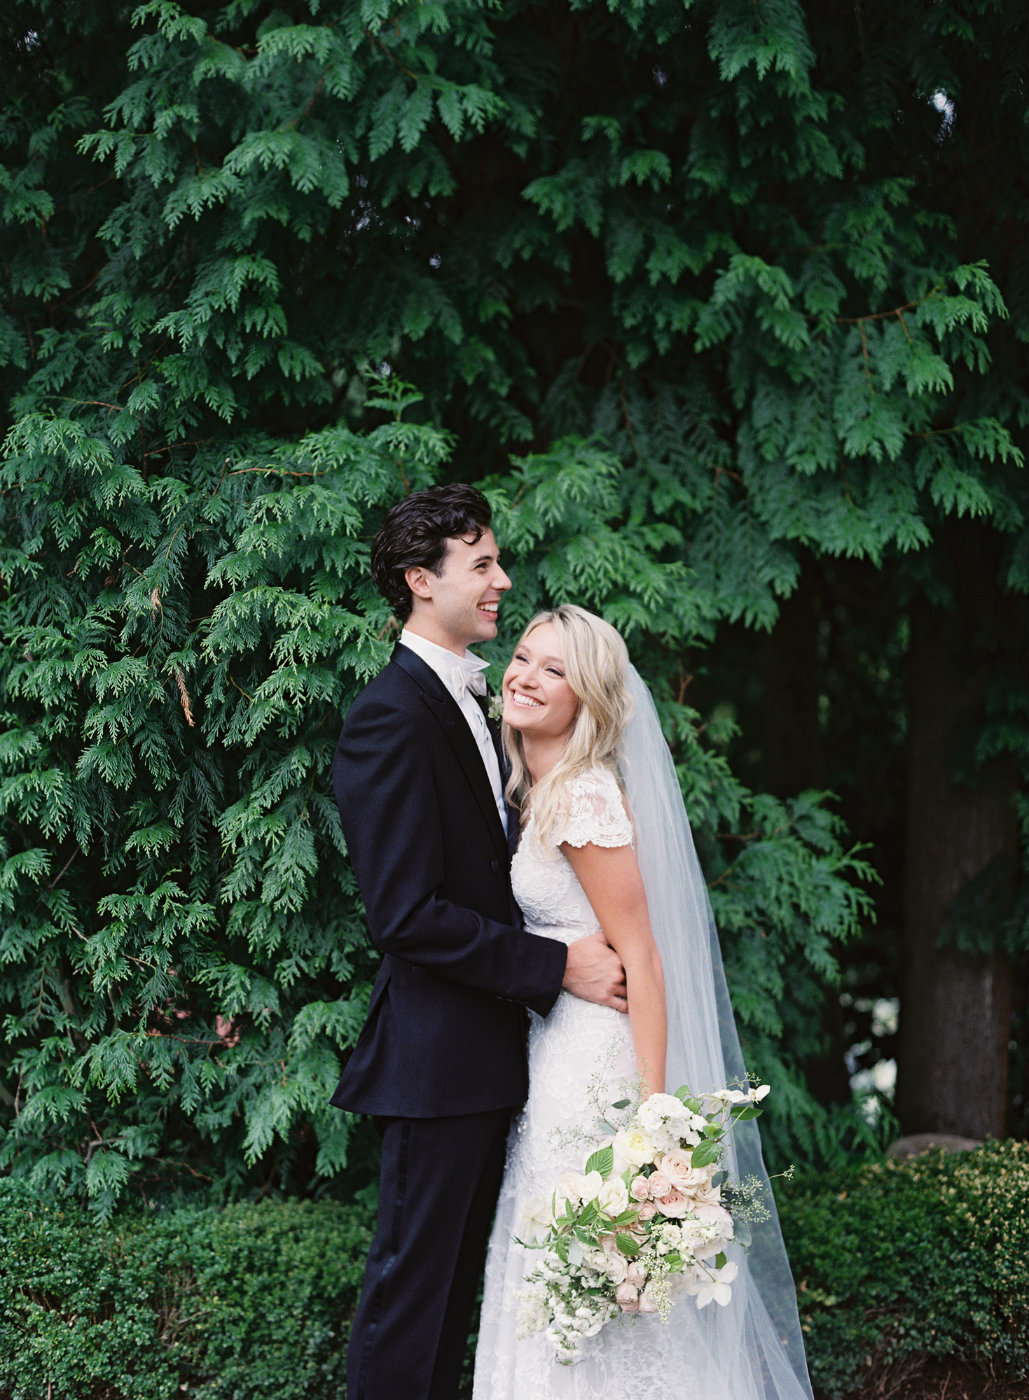 Seattle Bride and Groom romantic garden wedding designed by Flora Nova Design.